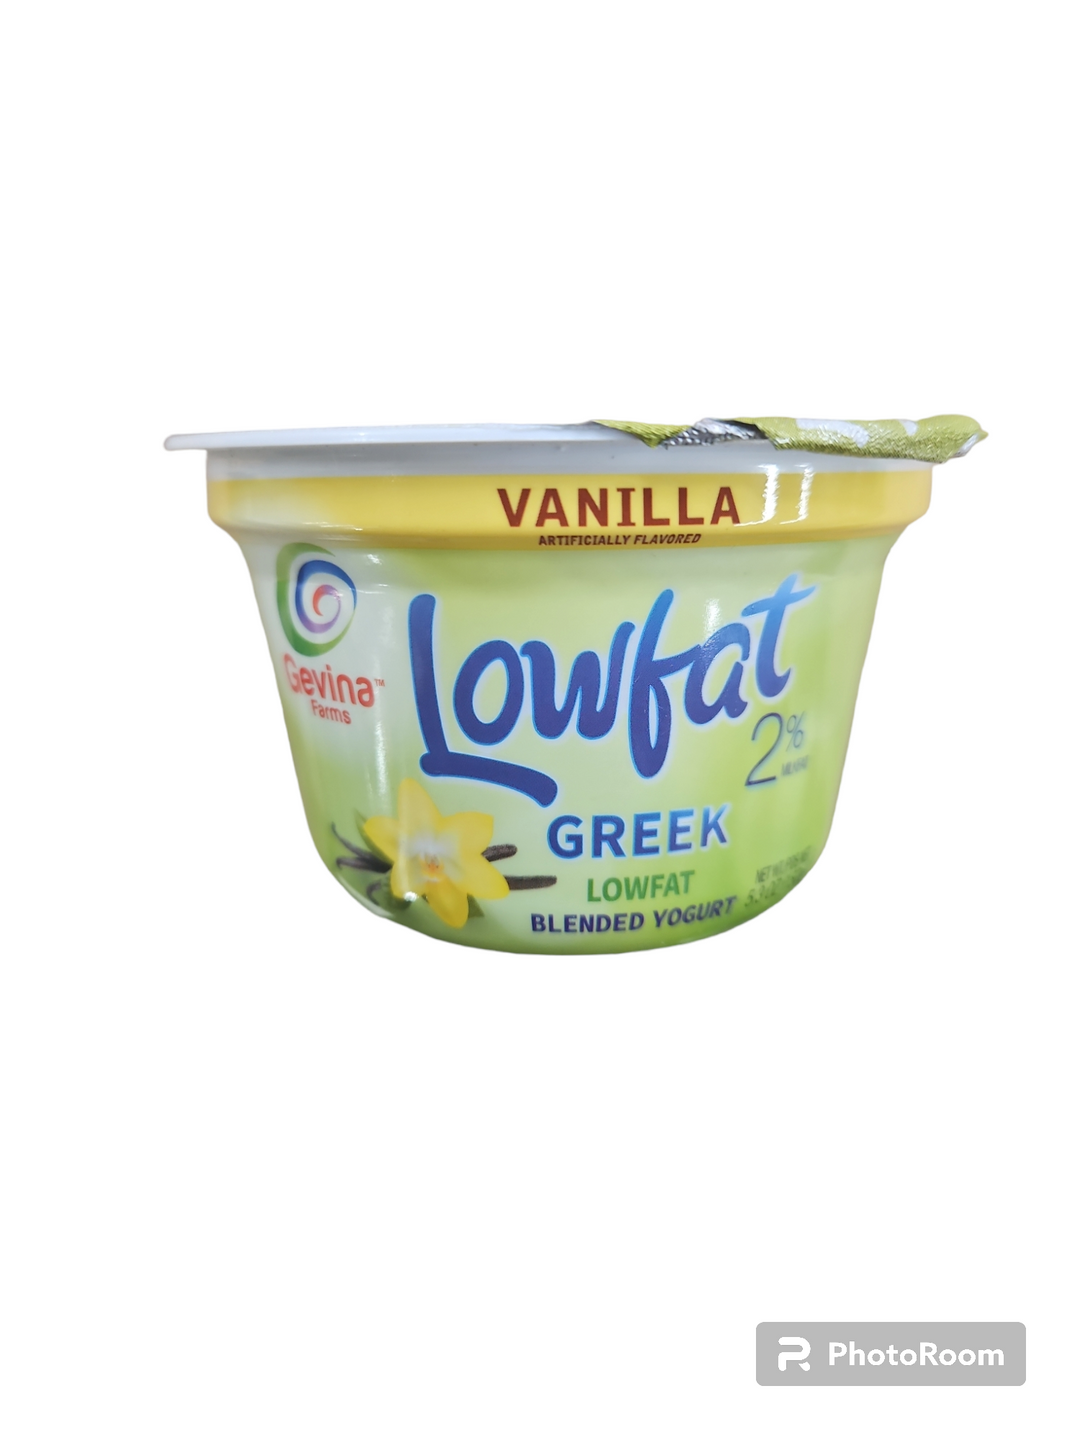 Gevina Greek 2% Blended Yogurt Vanilla